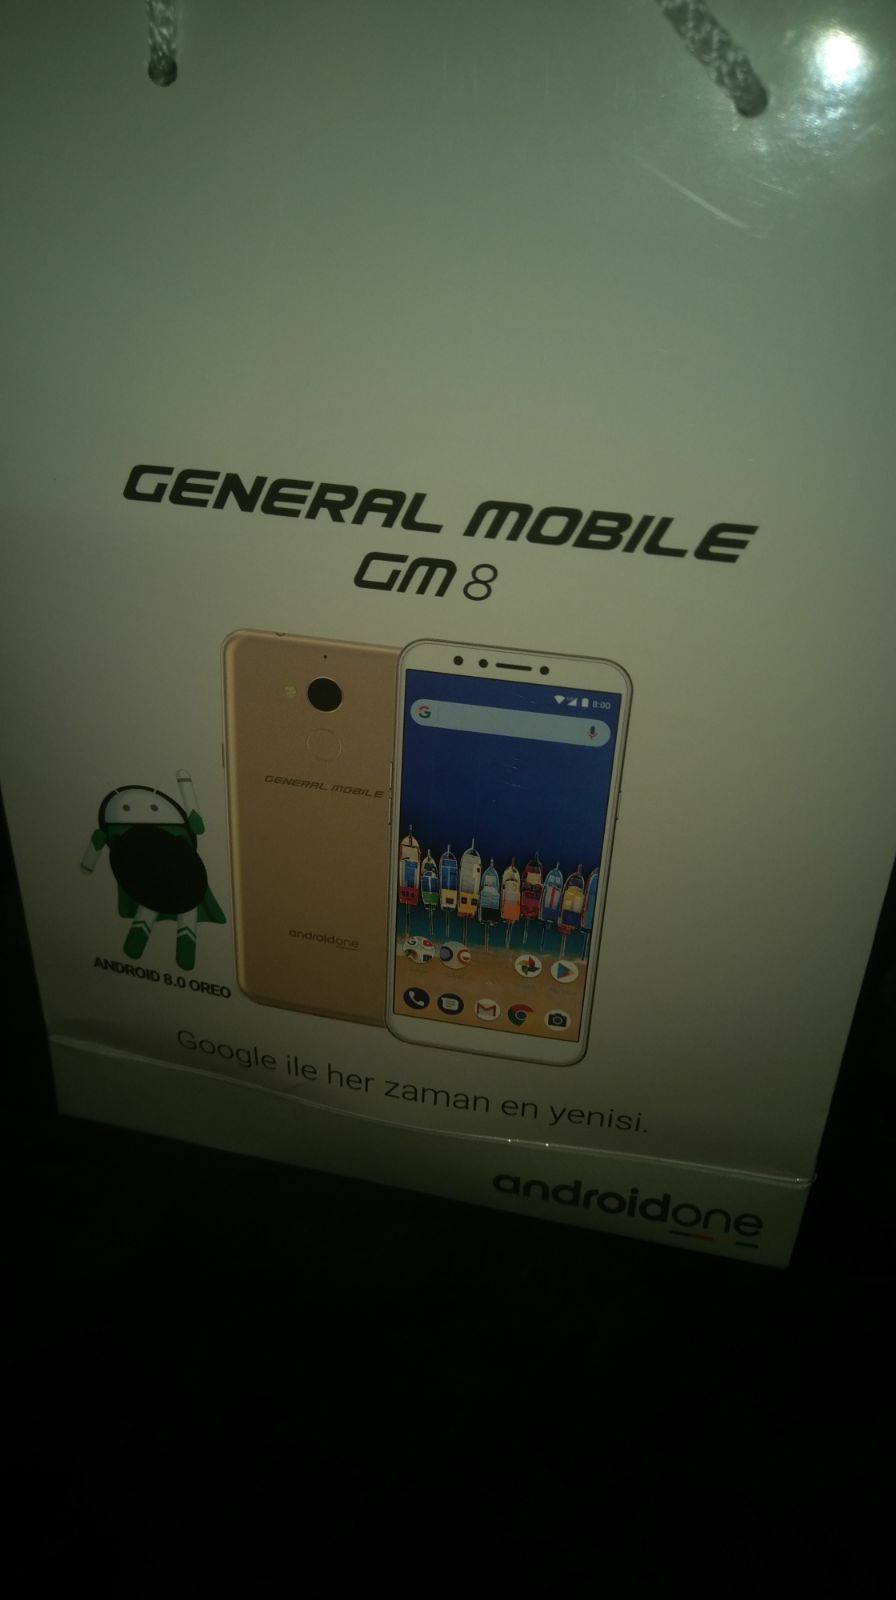 ★★ General Mobile GM 8 [ANA KONU] ★★Sd 435 İşlemci /5.7" - 720p Ekran ★★ 